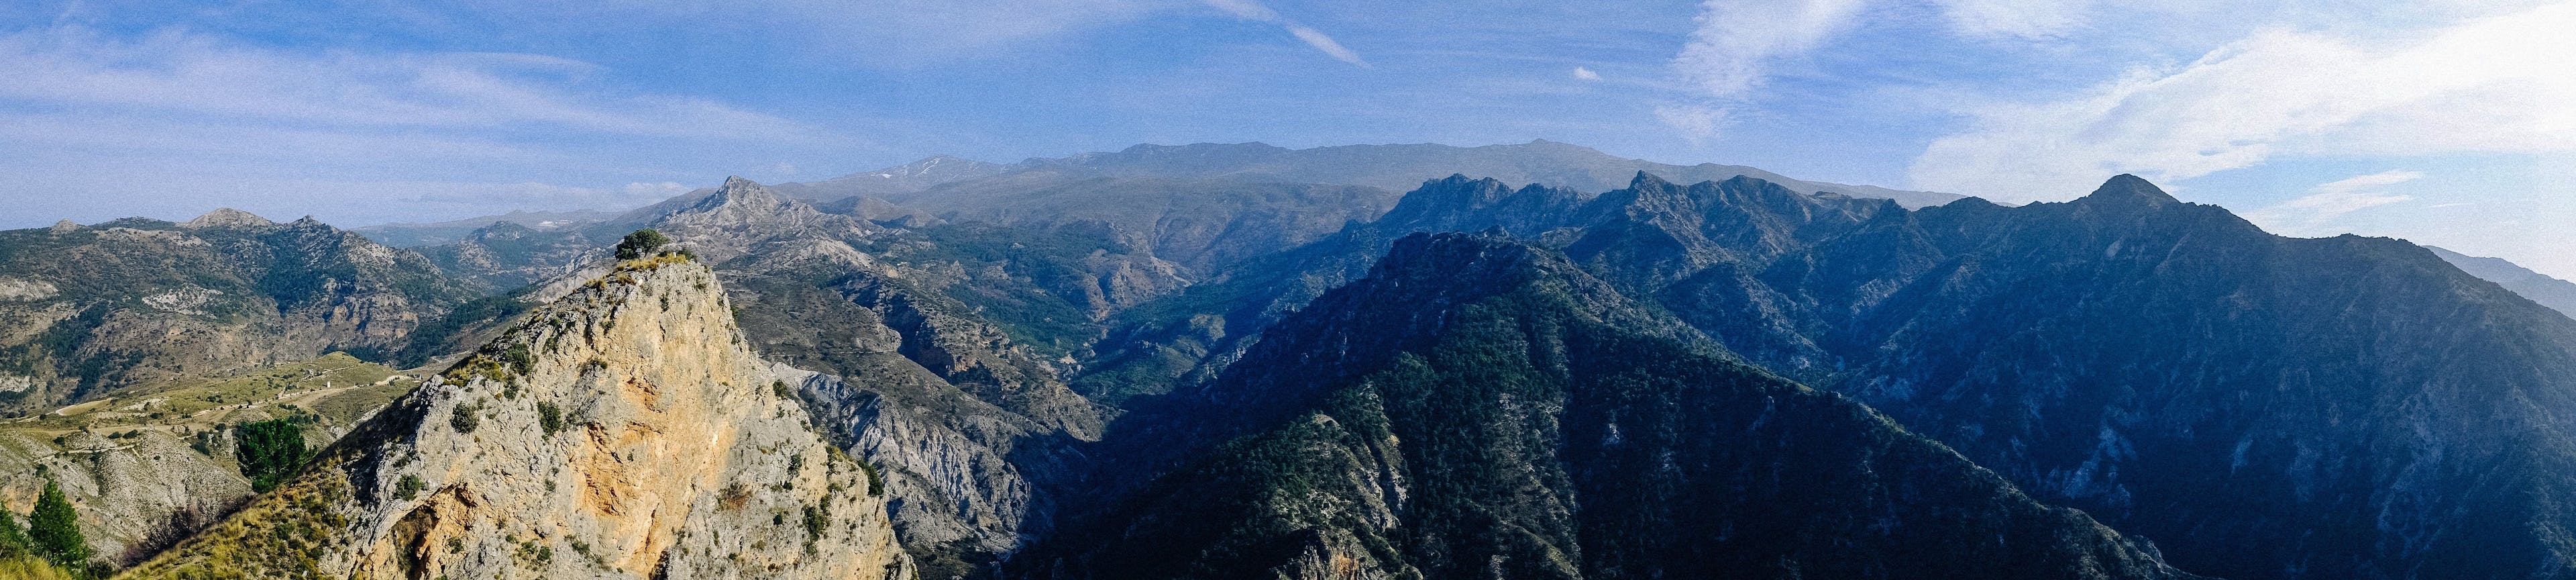 View on Sierra Nevada mountains in Spain.